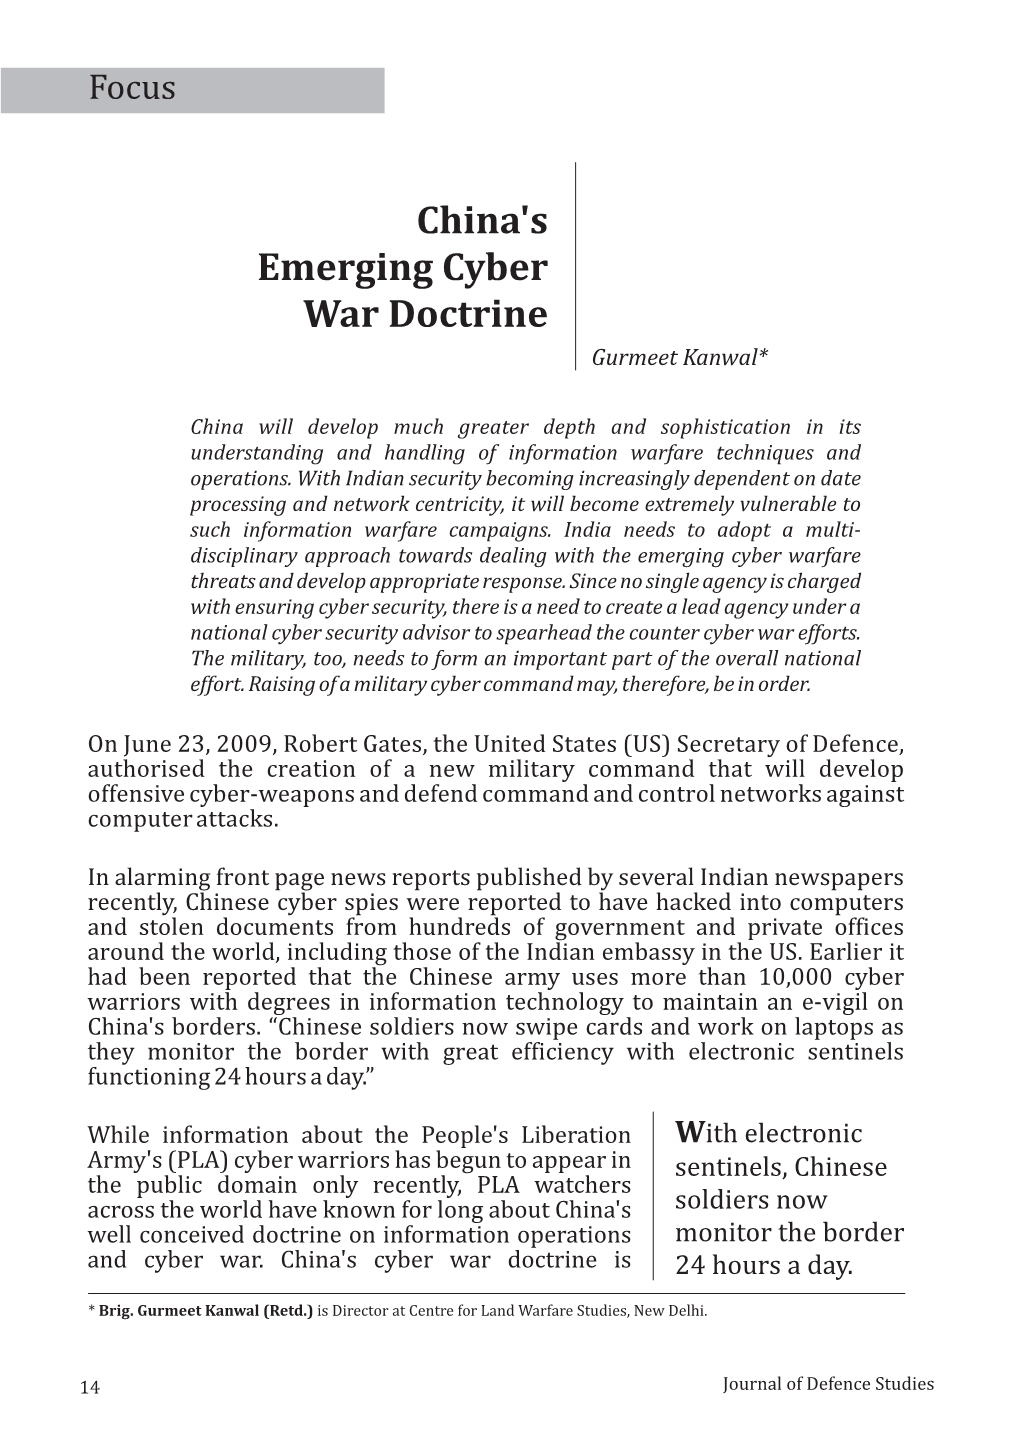 China's Emerging Cyber War Doctrine Gurmeet Kanwal*